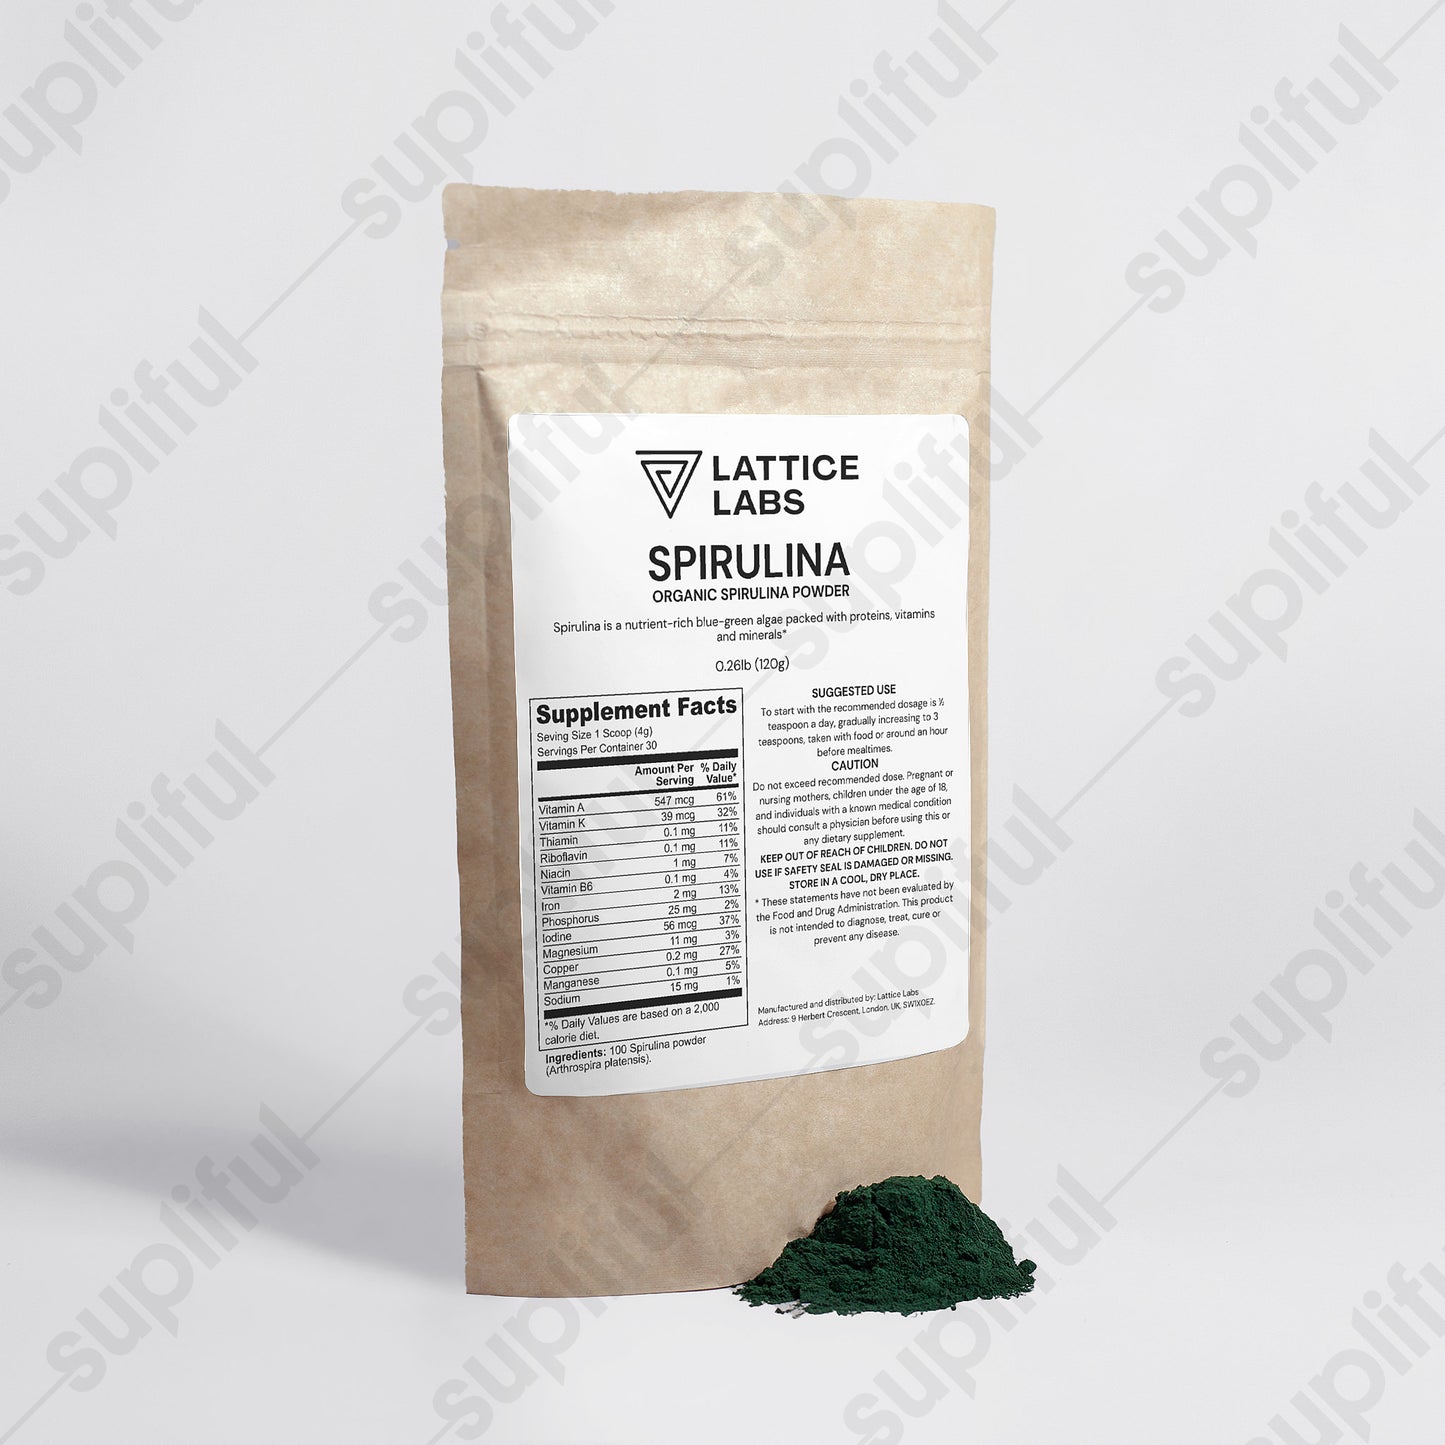 Lattice Labs Organic Spirulina Powder